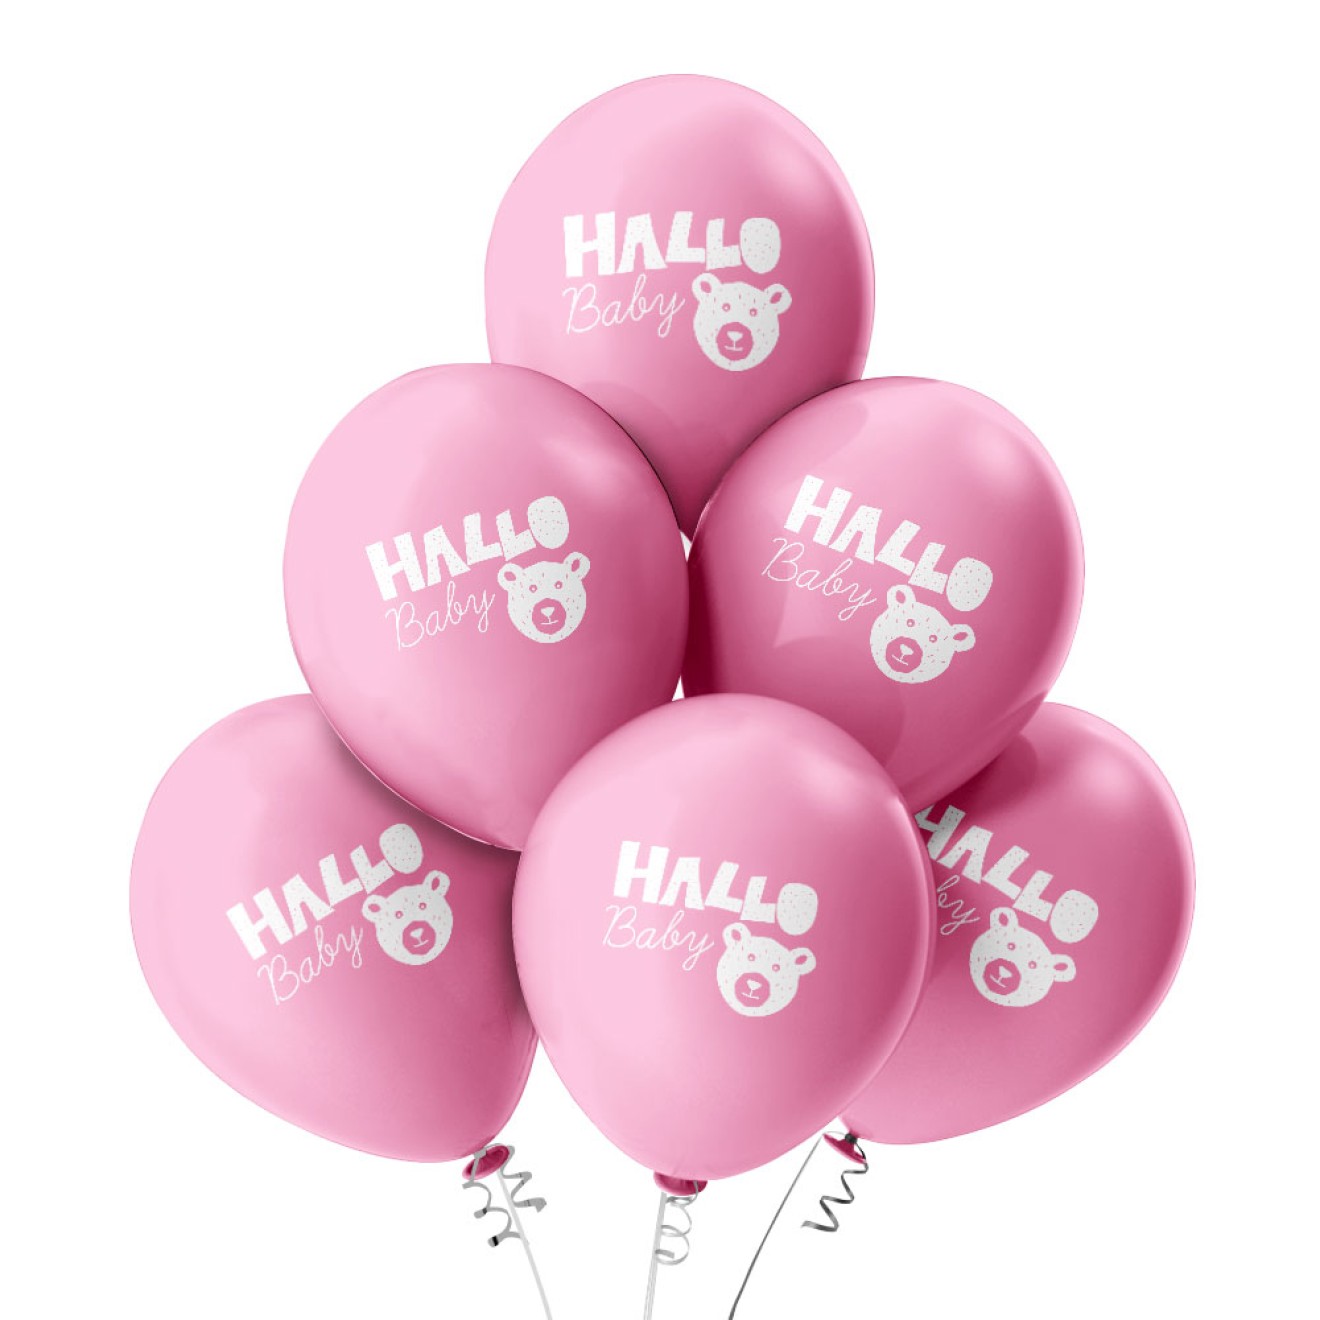 6 Luftballons Hallo Baby - Rosa